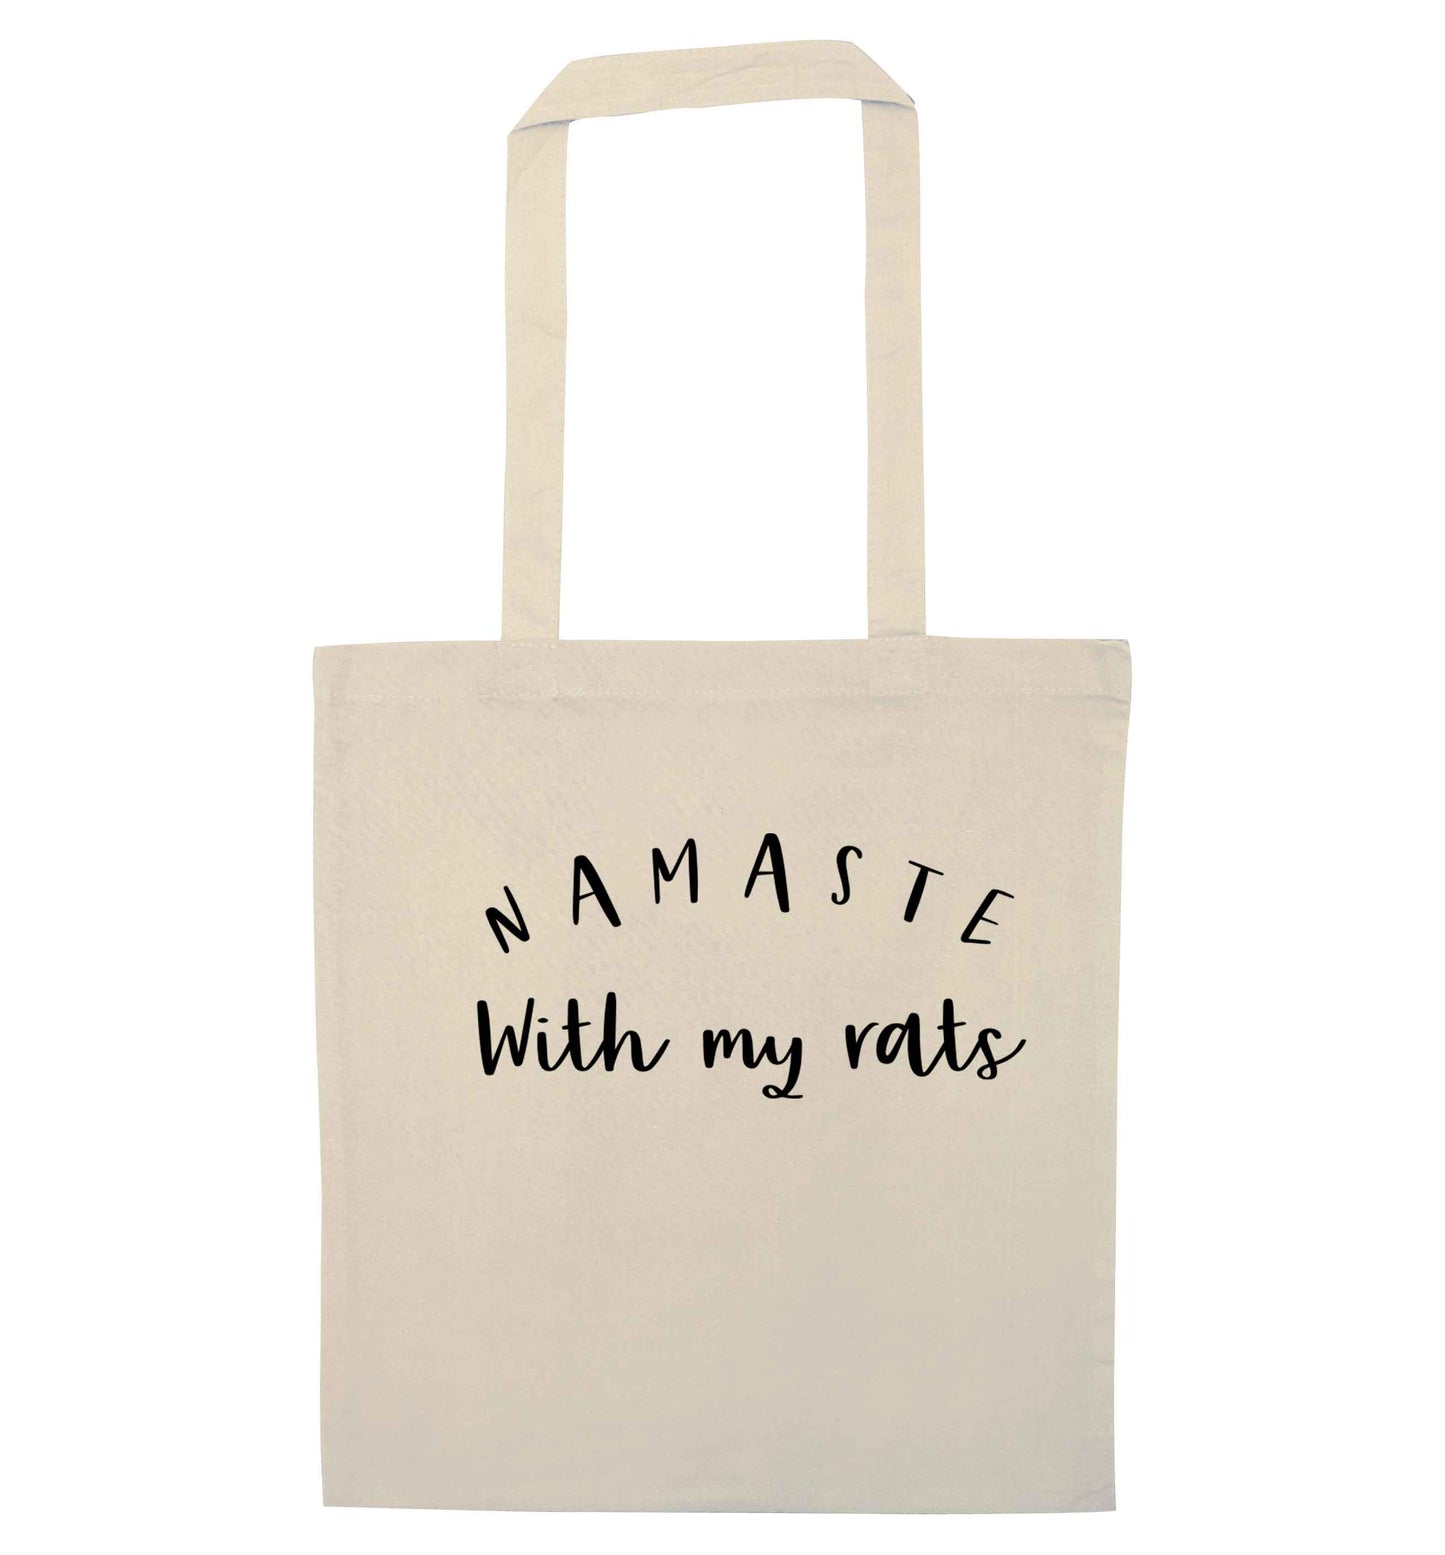 Namaste with my rats natural tote bag